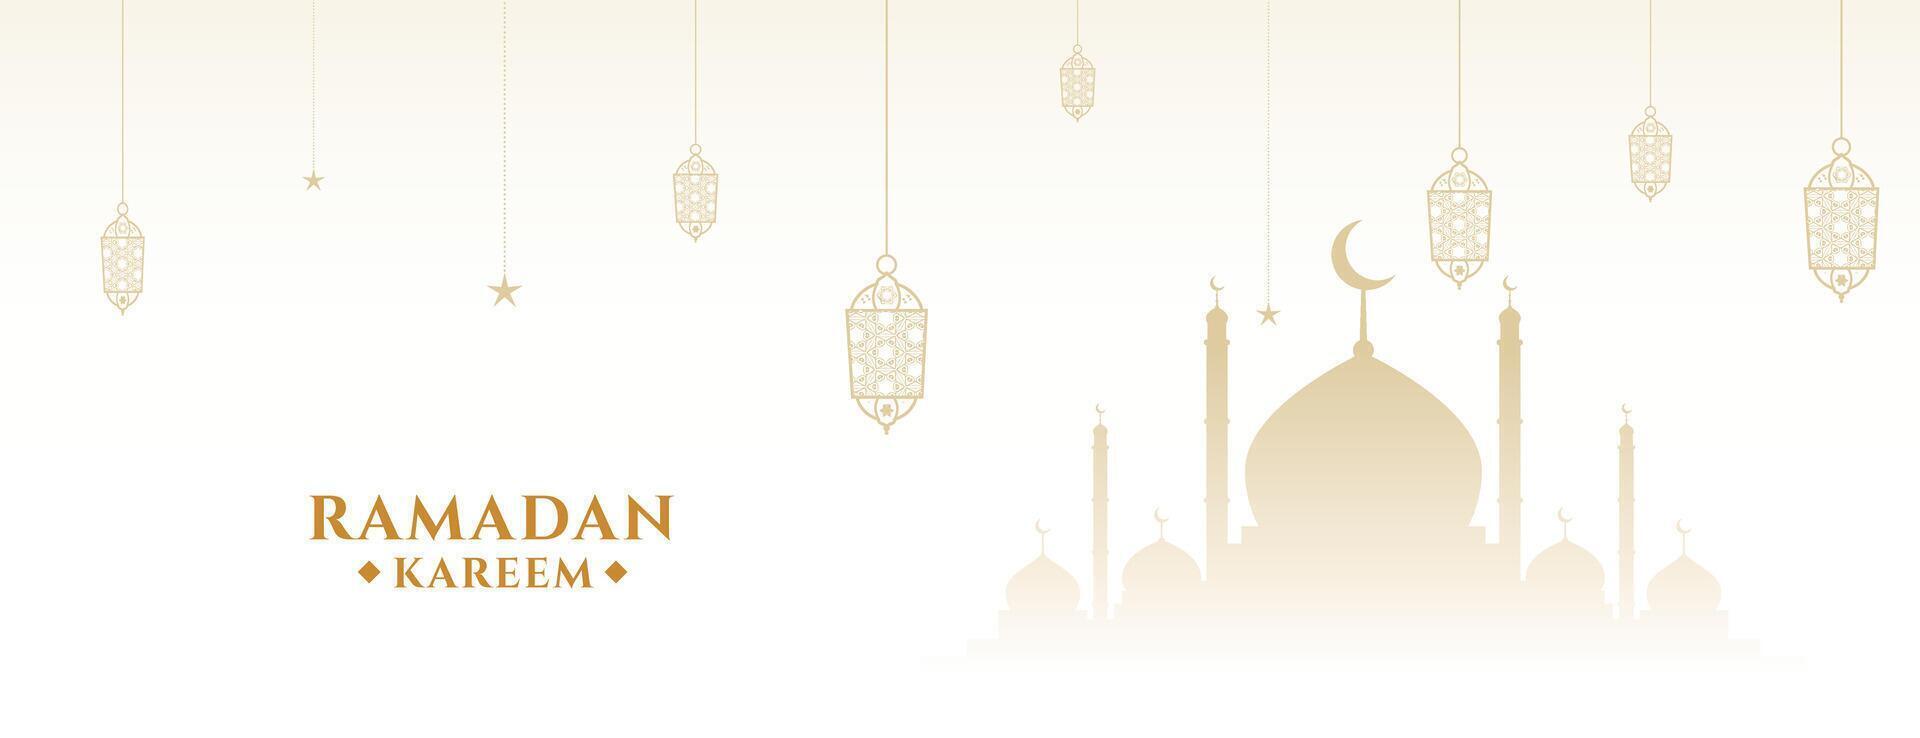 ramadan kareem white traditional islamic banner design vector